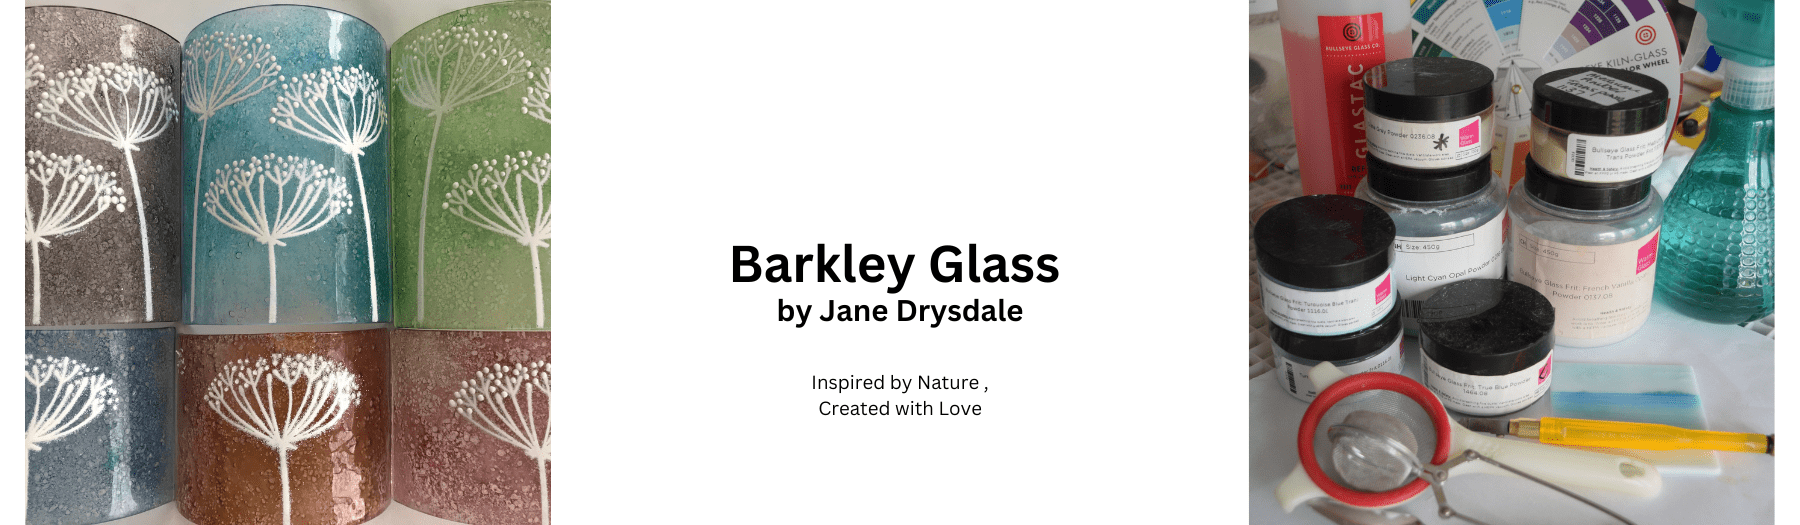 Barkley Glass